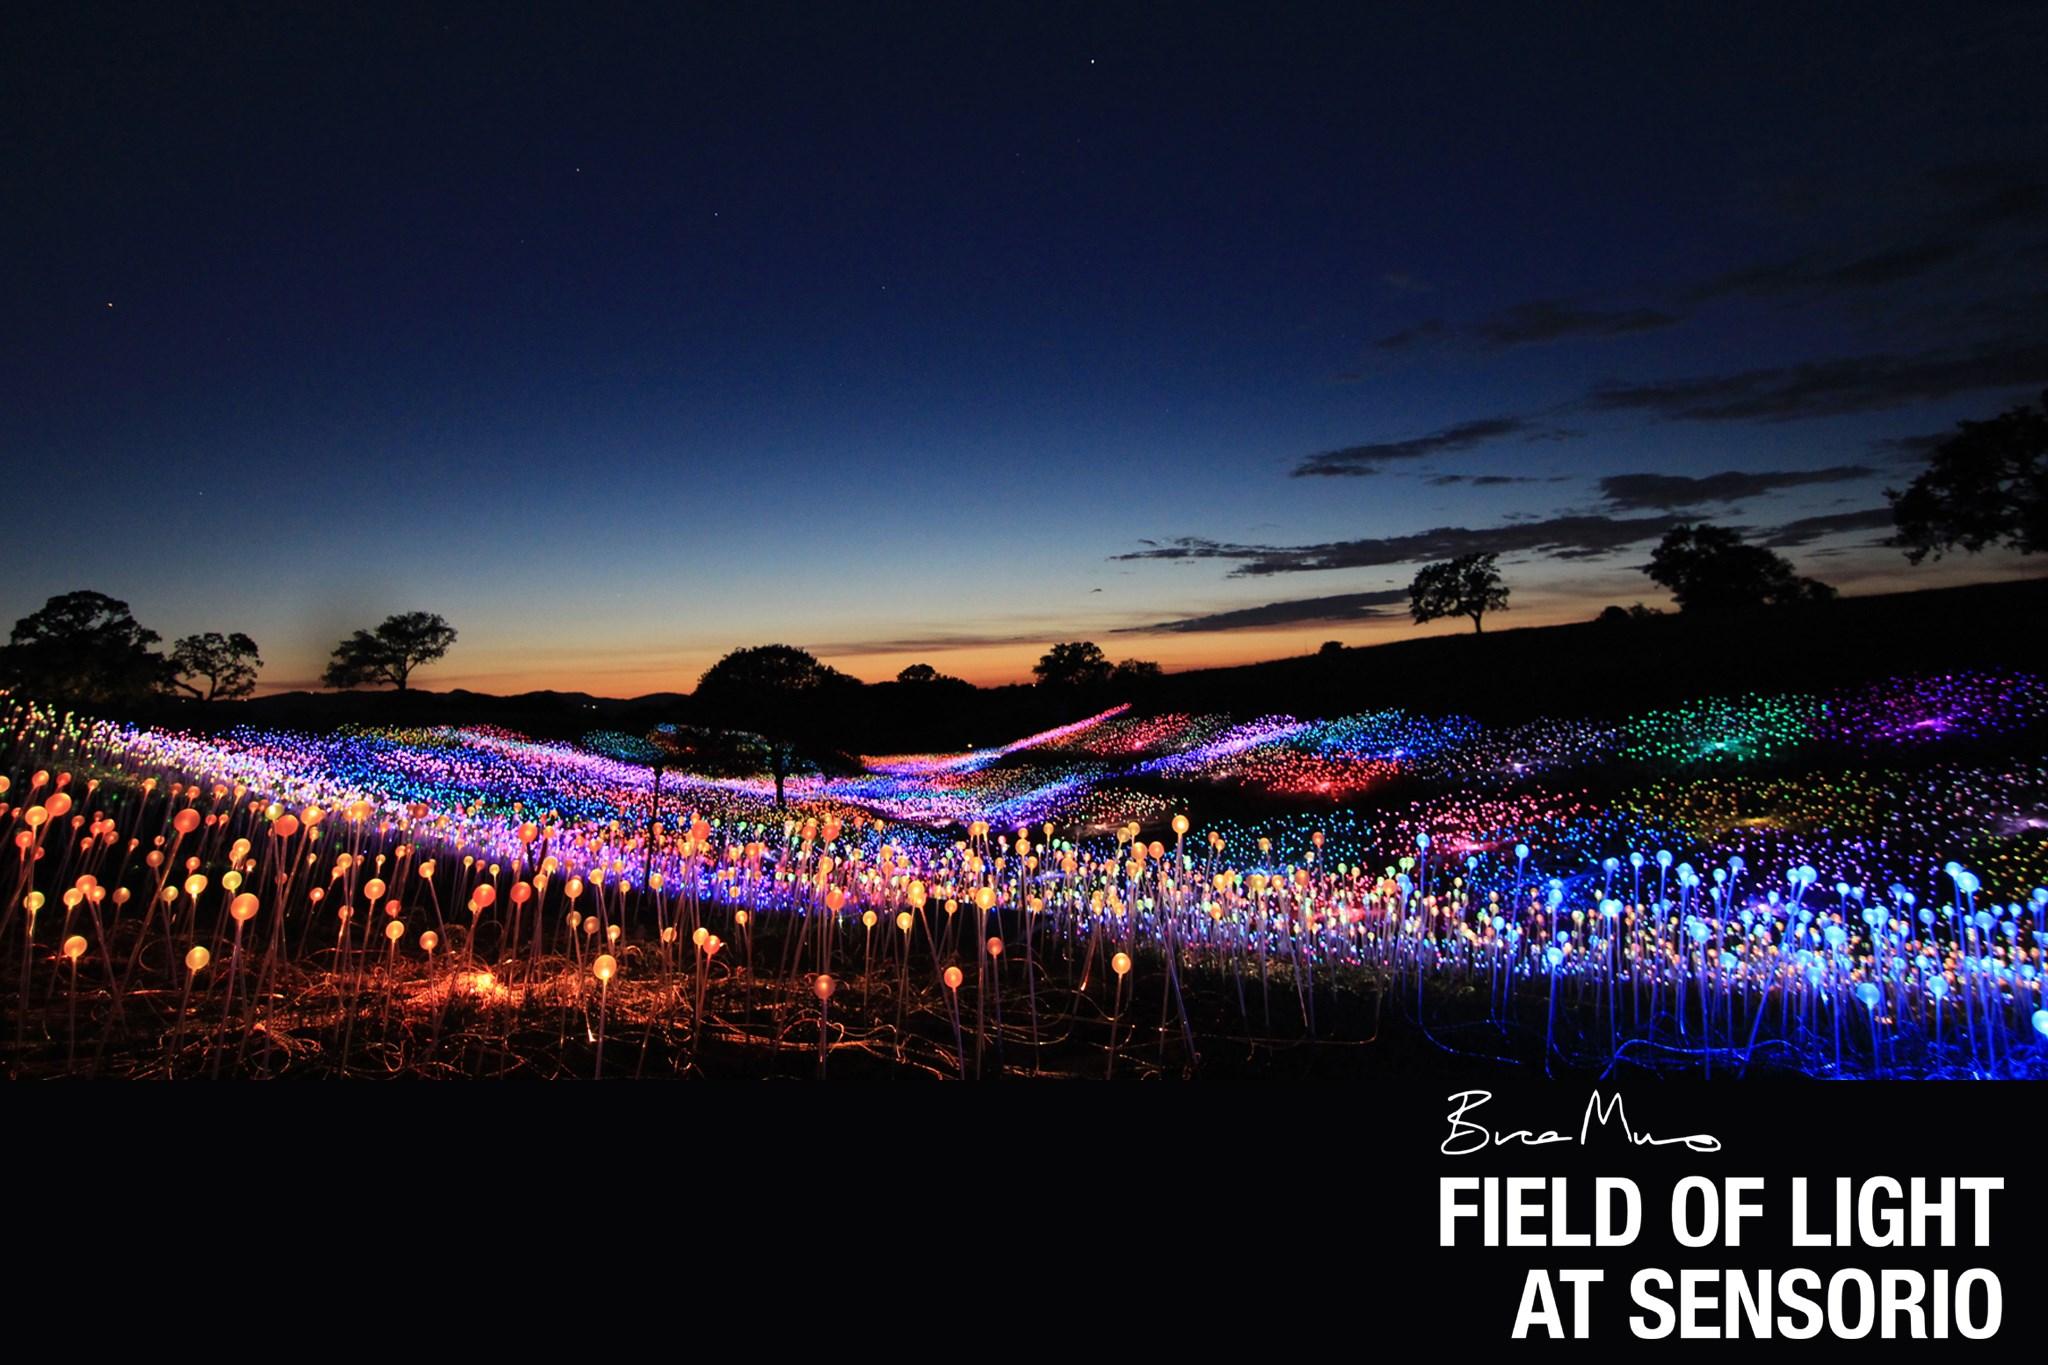 Bruce Munro: Field of Light at Sensorio, Thursday FAMILY NIGHT July 16th